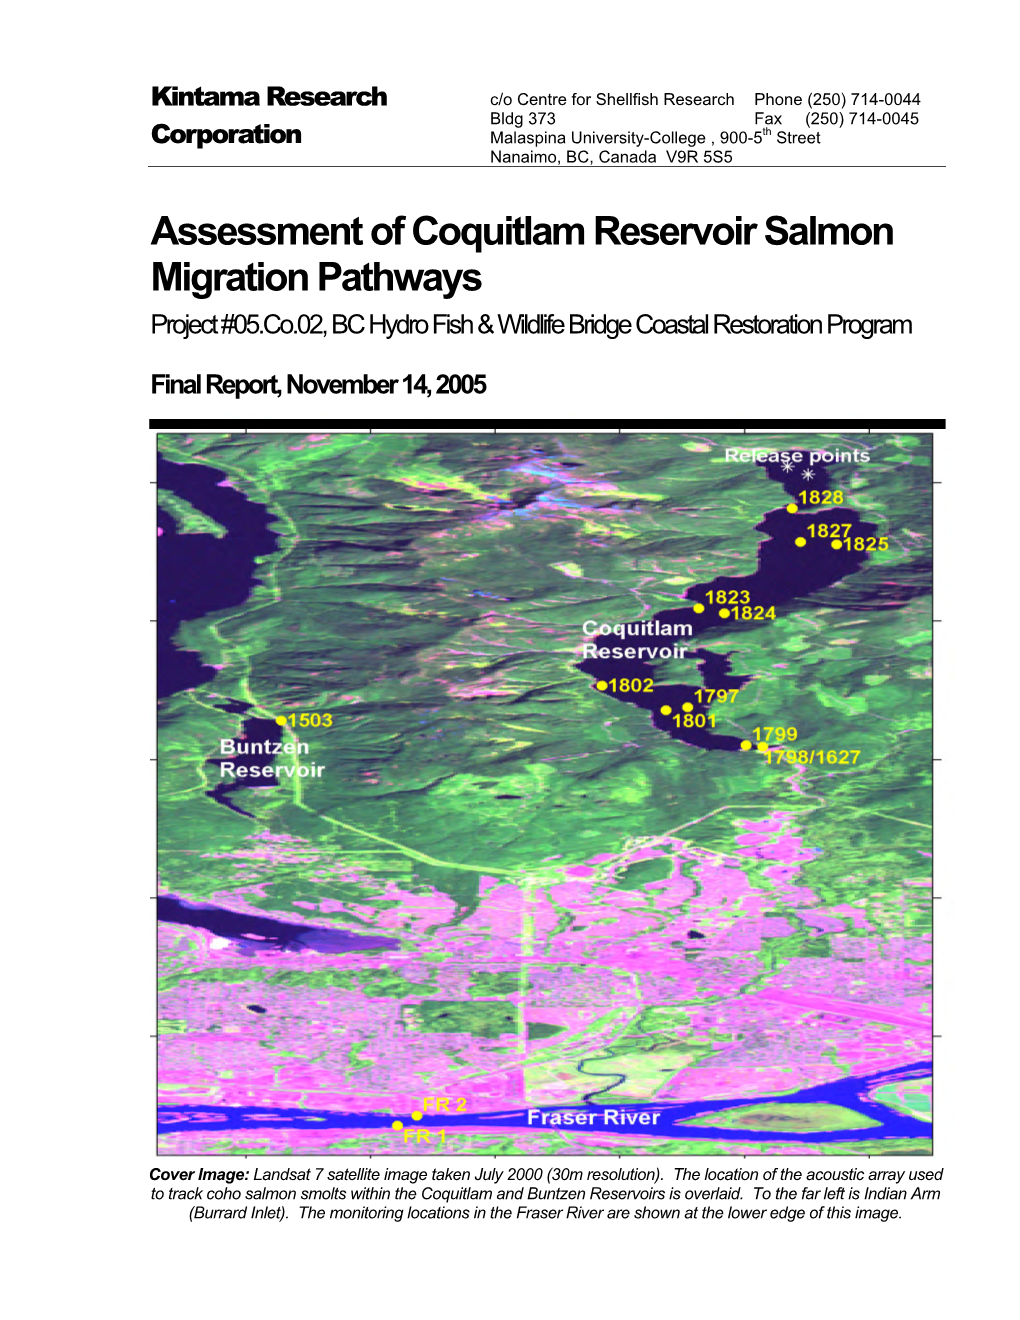 Assessment of Coquitlam Reservoir Salmon Migration Pathways Project #05.Co.02, BC Hydro Fish & Wildlife Bridge Coastal Restoration Program